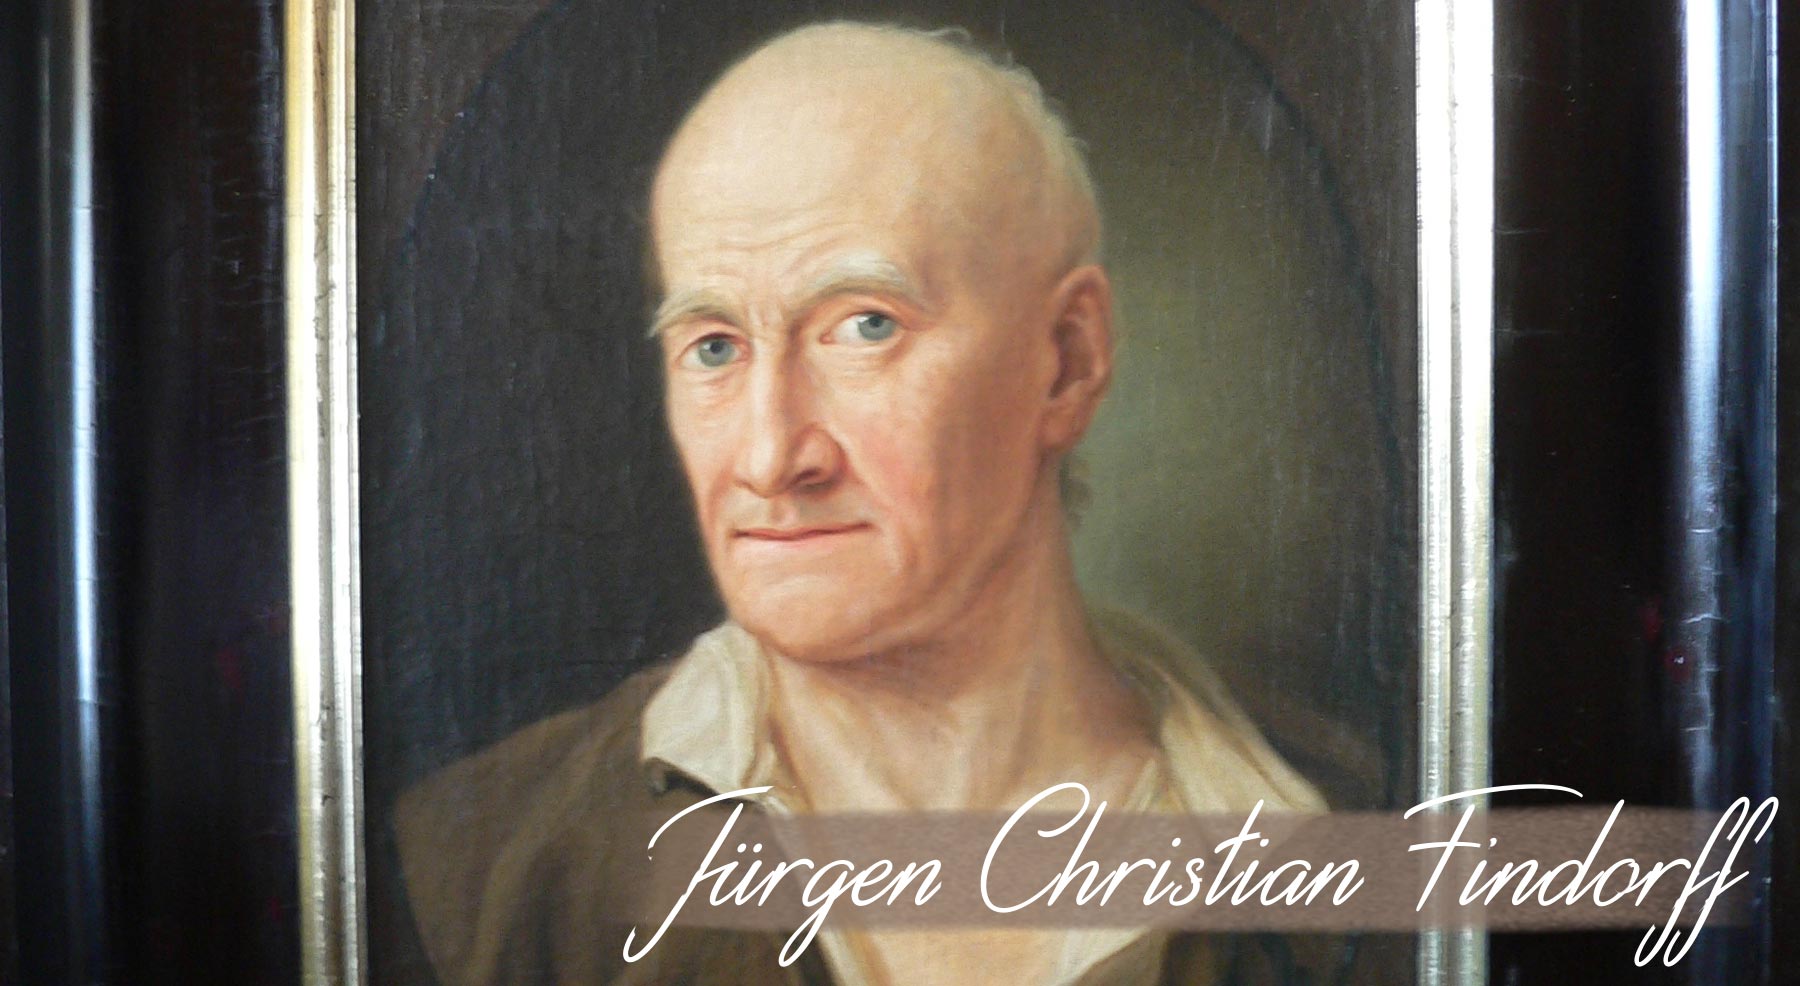 Jürgen Christian Findorff